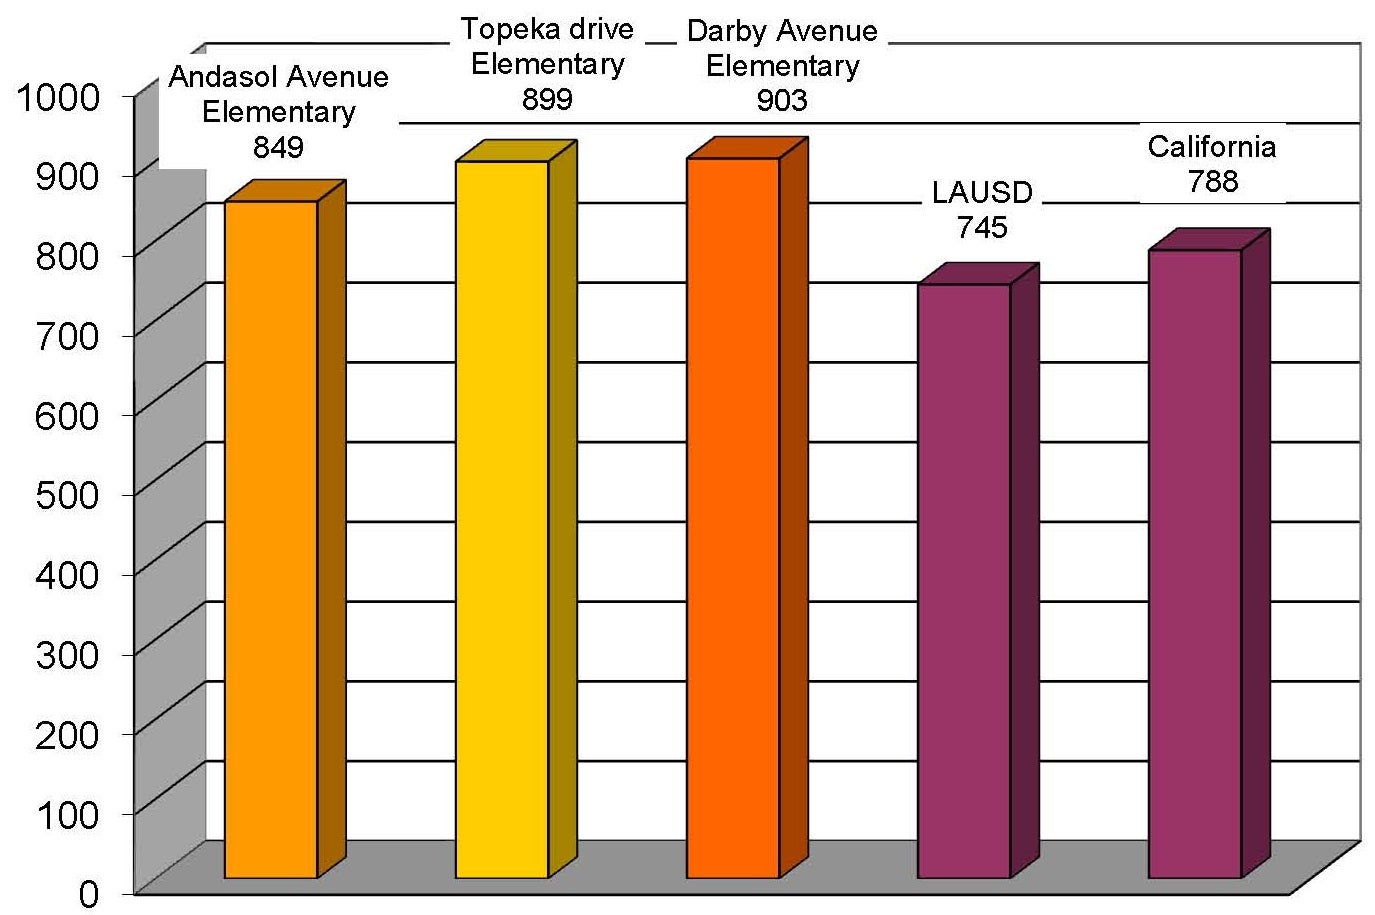 Comparison of API scores of Elementary Schools in 2011-2012